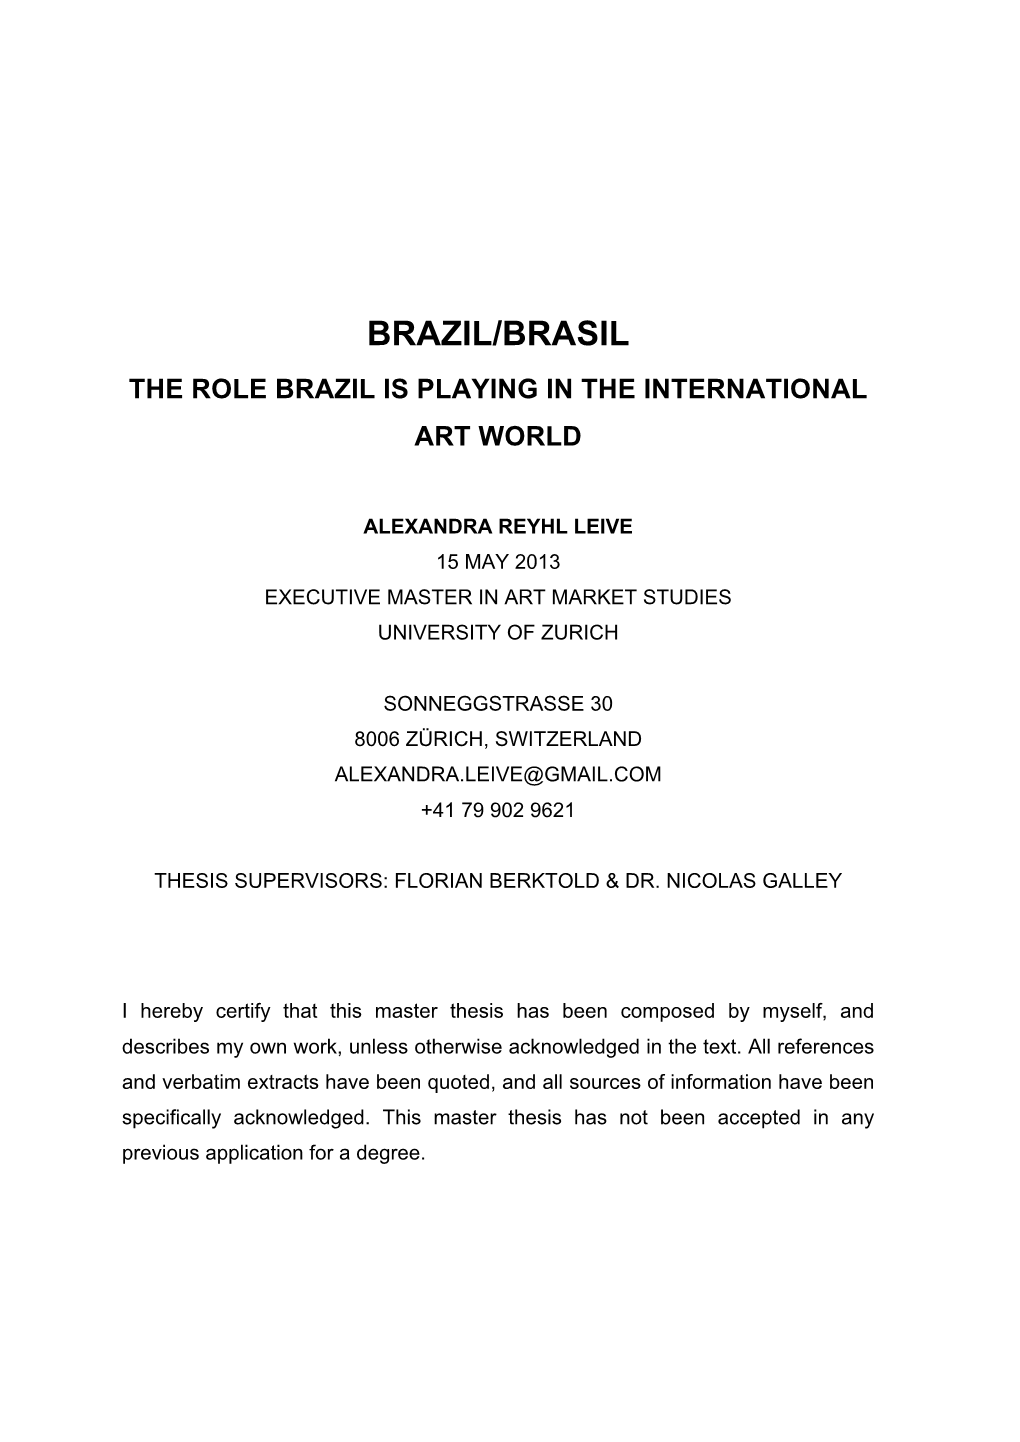 Brazil/Brasil the Role Brazil Is Playing in the International Art World